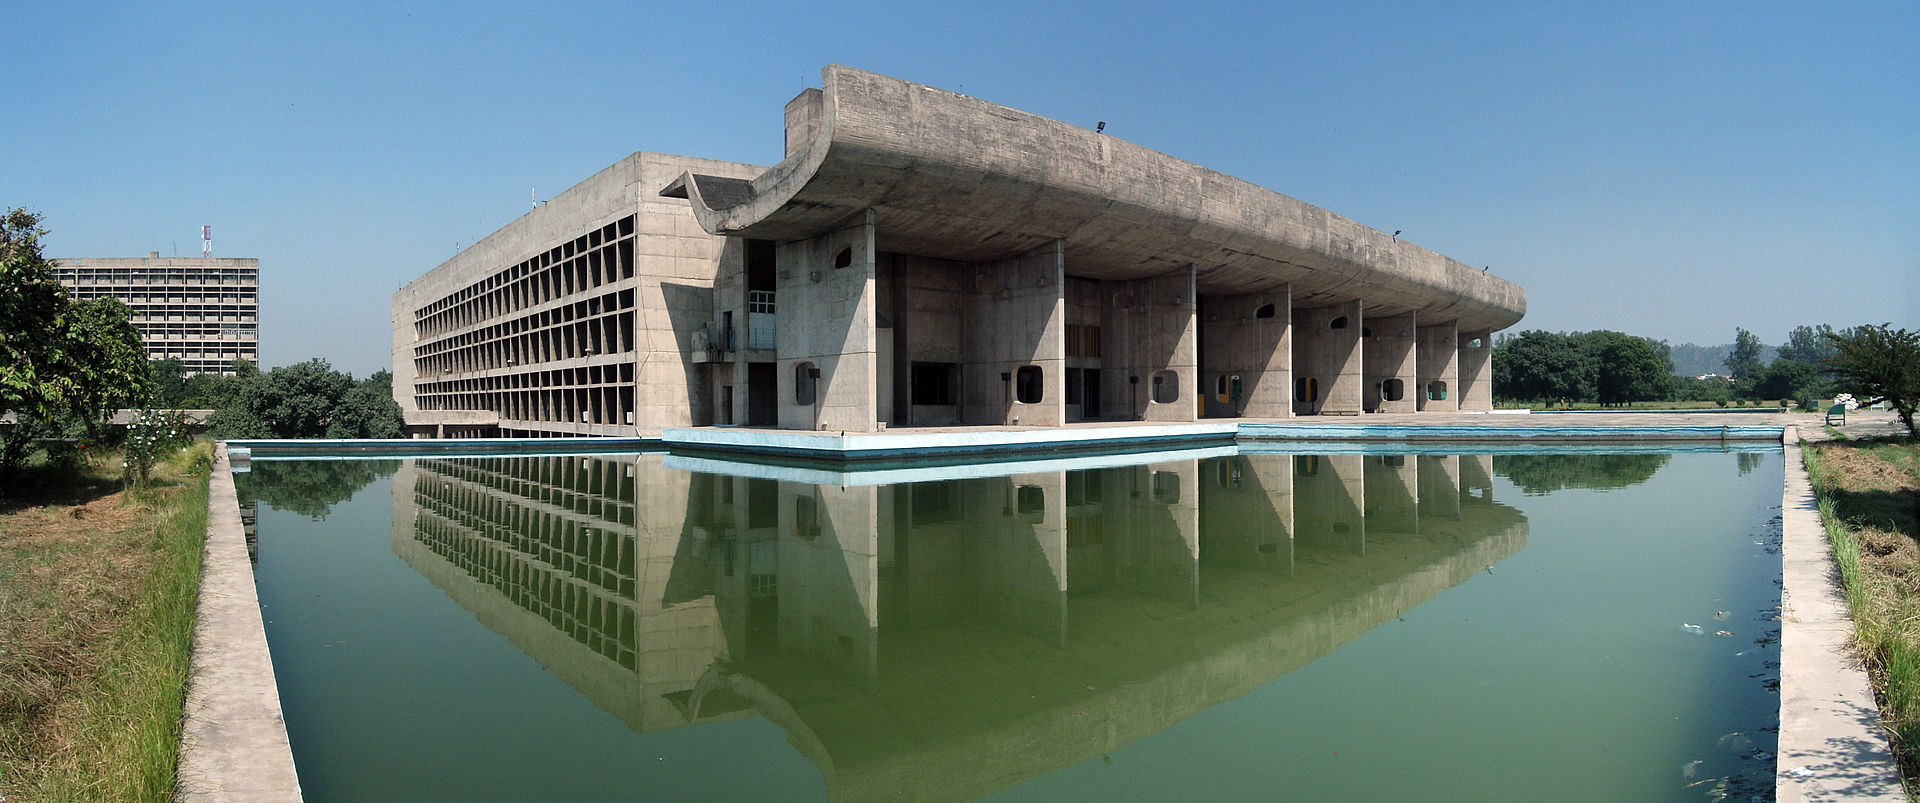 Архитектор Ле Корбюзье. Дворец Ассамблеи (стиль брутализм), штат Пенджаб, Индия